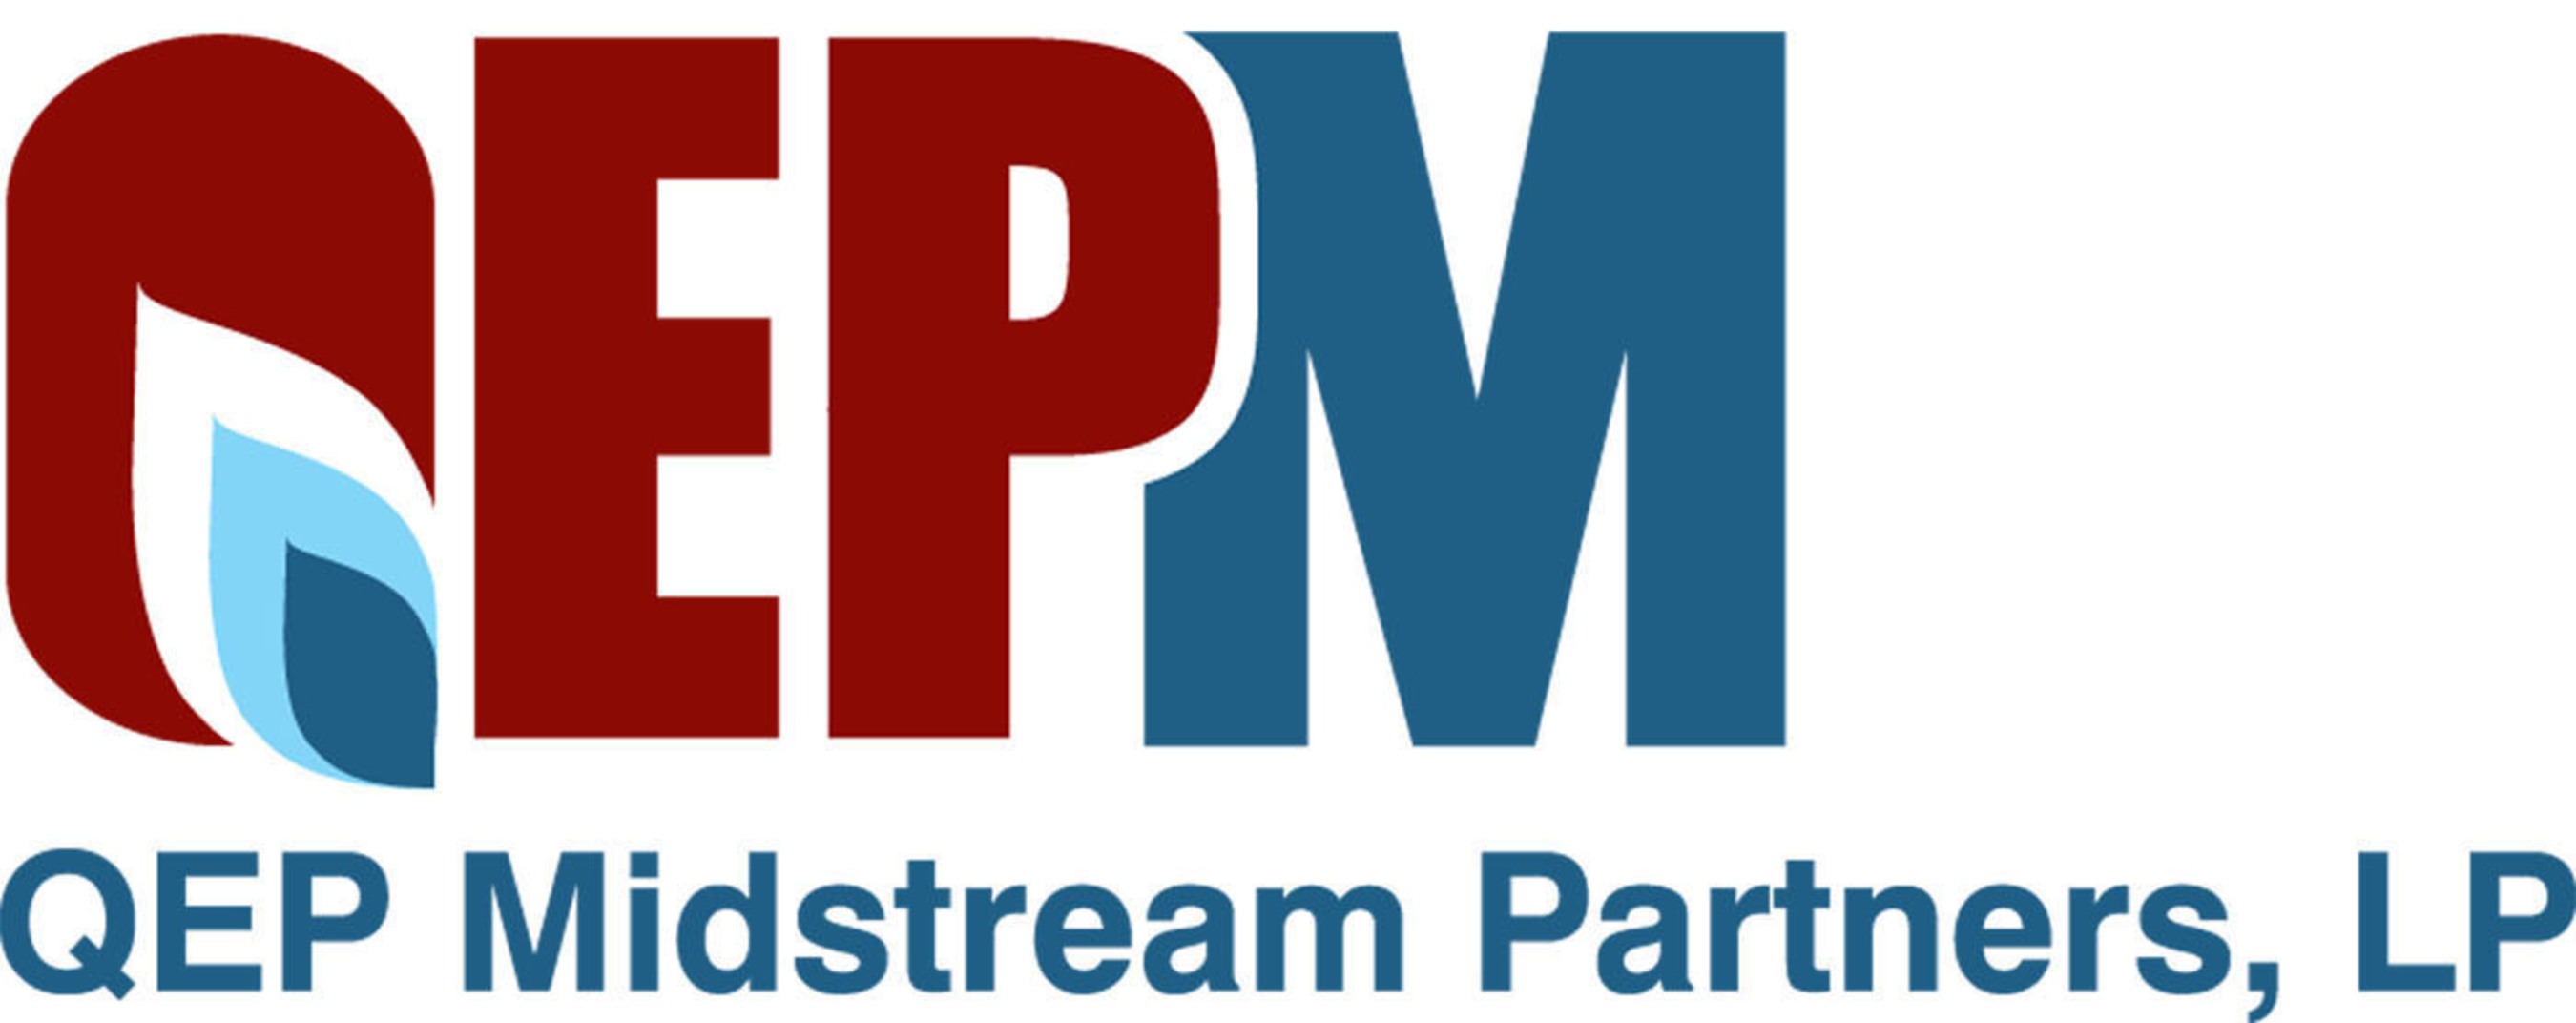 QEP Midstream Partners, LP logo.